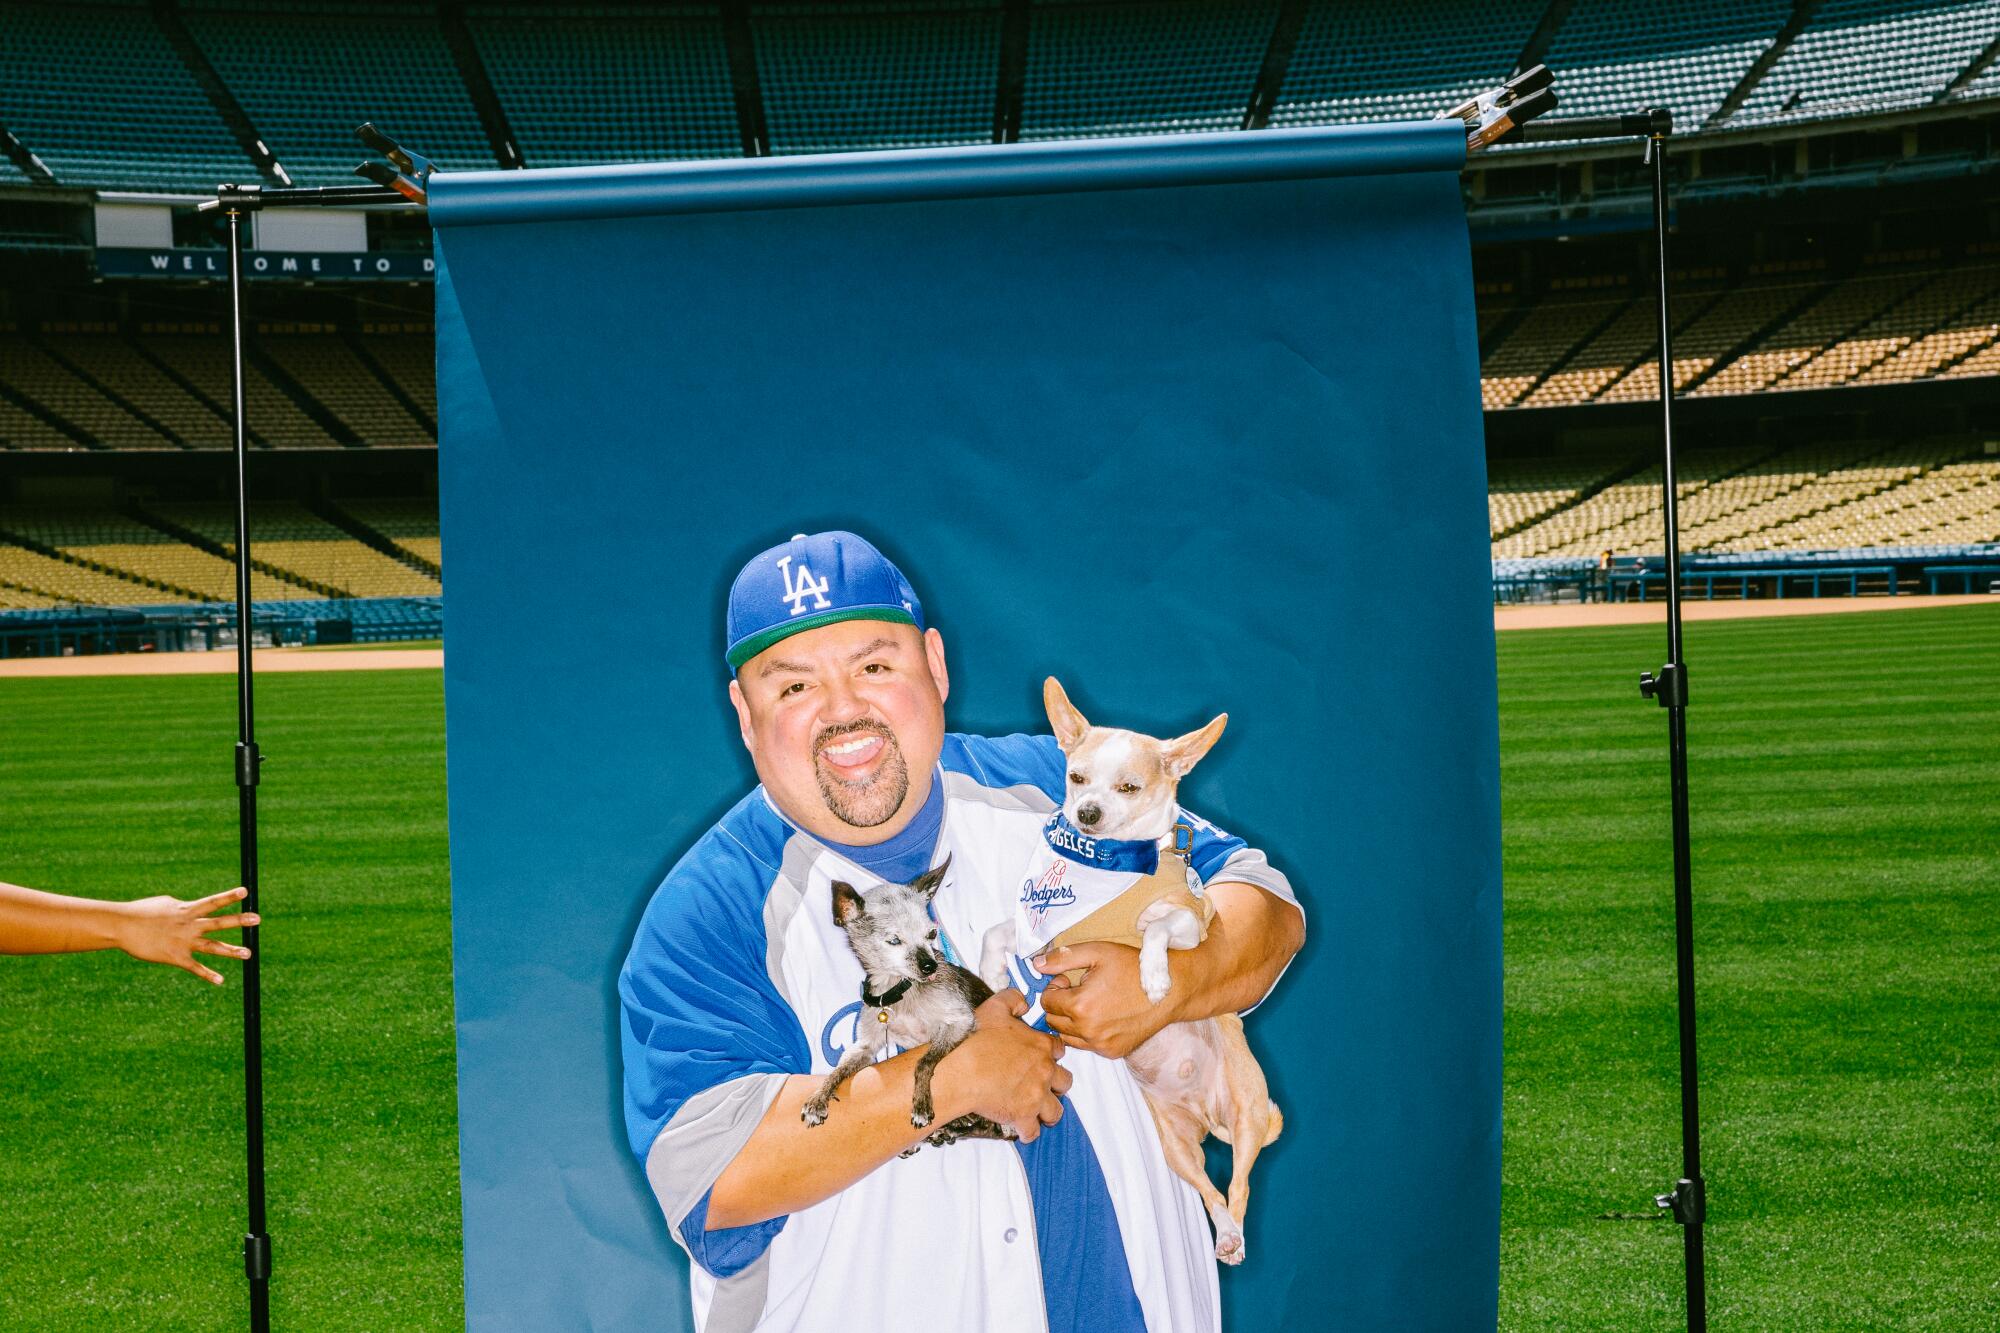 WATCH: Gabriel Iglesias Comedy Special at Dodgers Stadium Gets